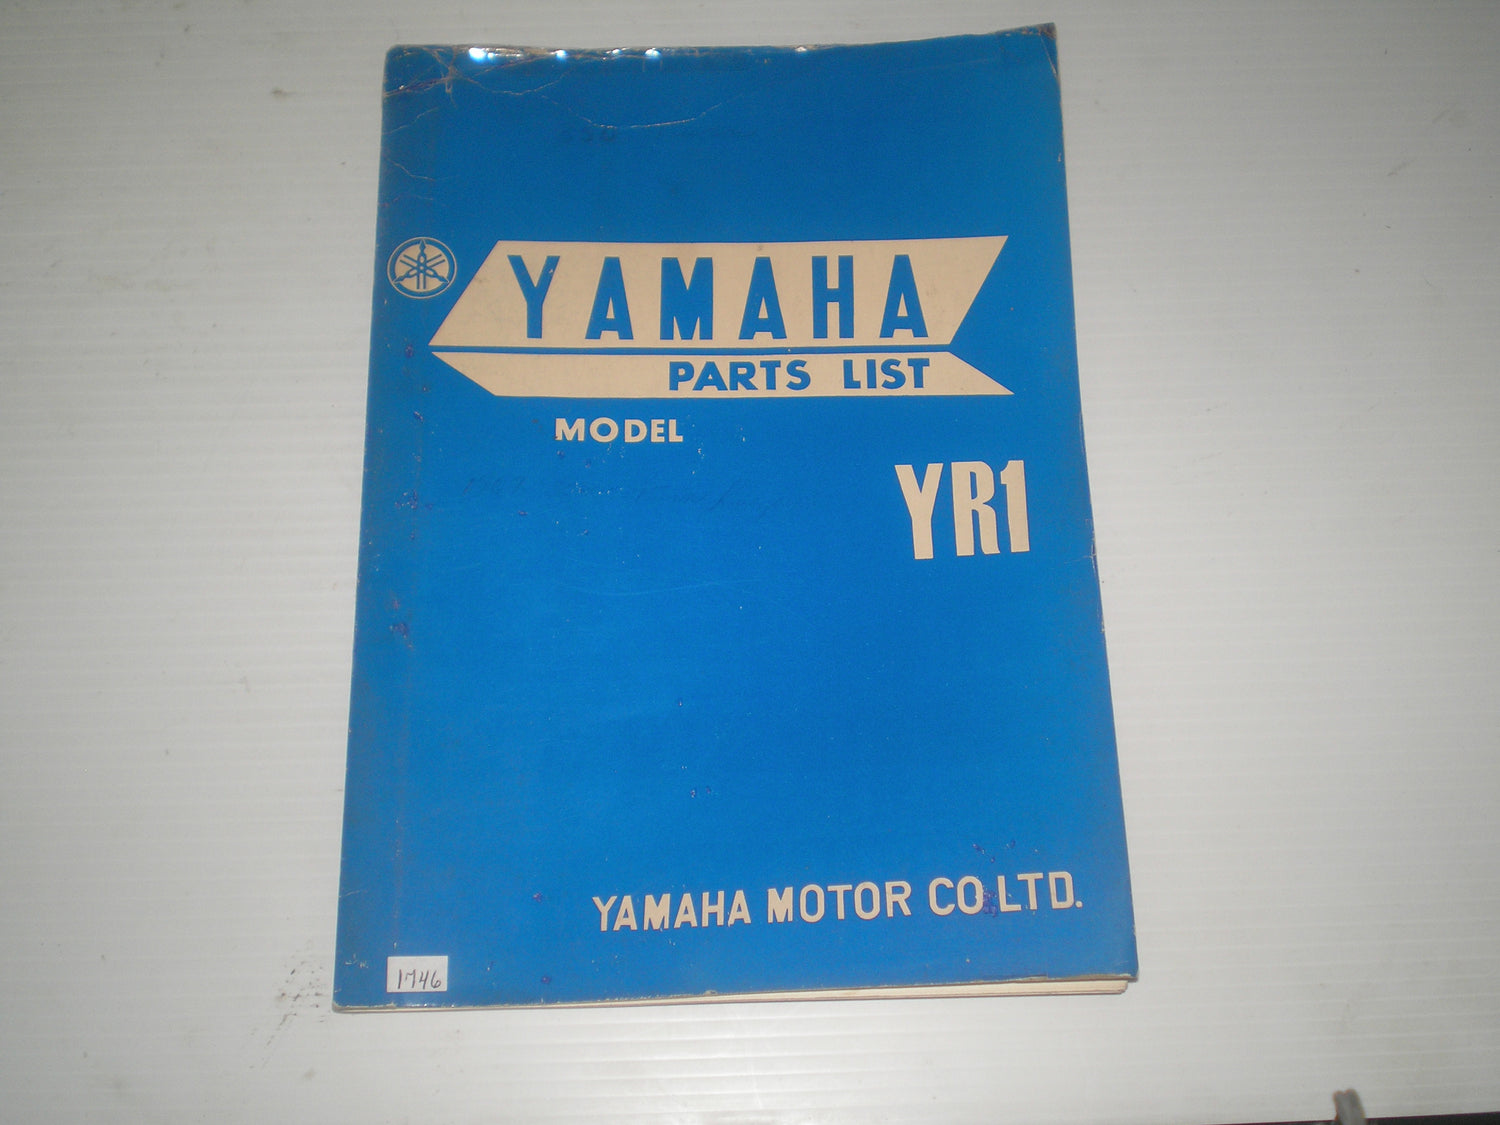 Yamaha Parts Catalogue & Parts List